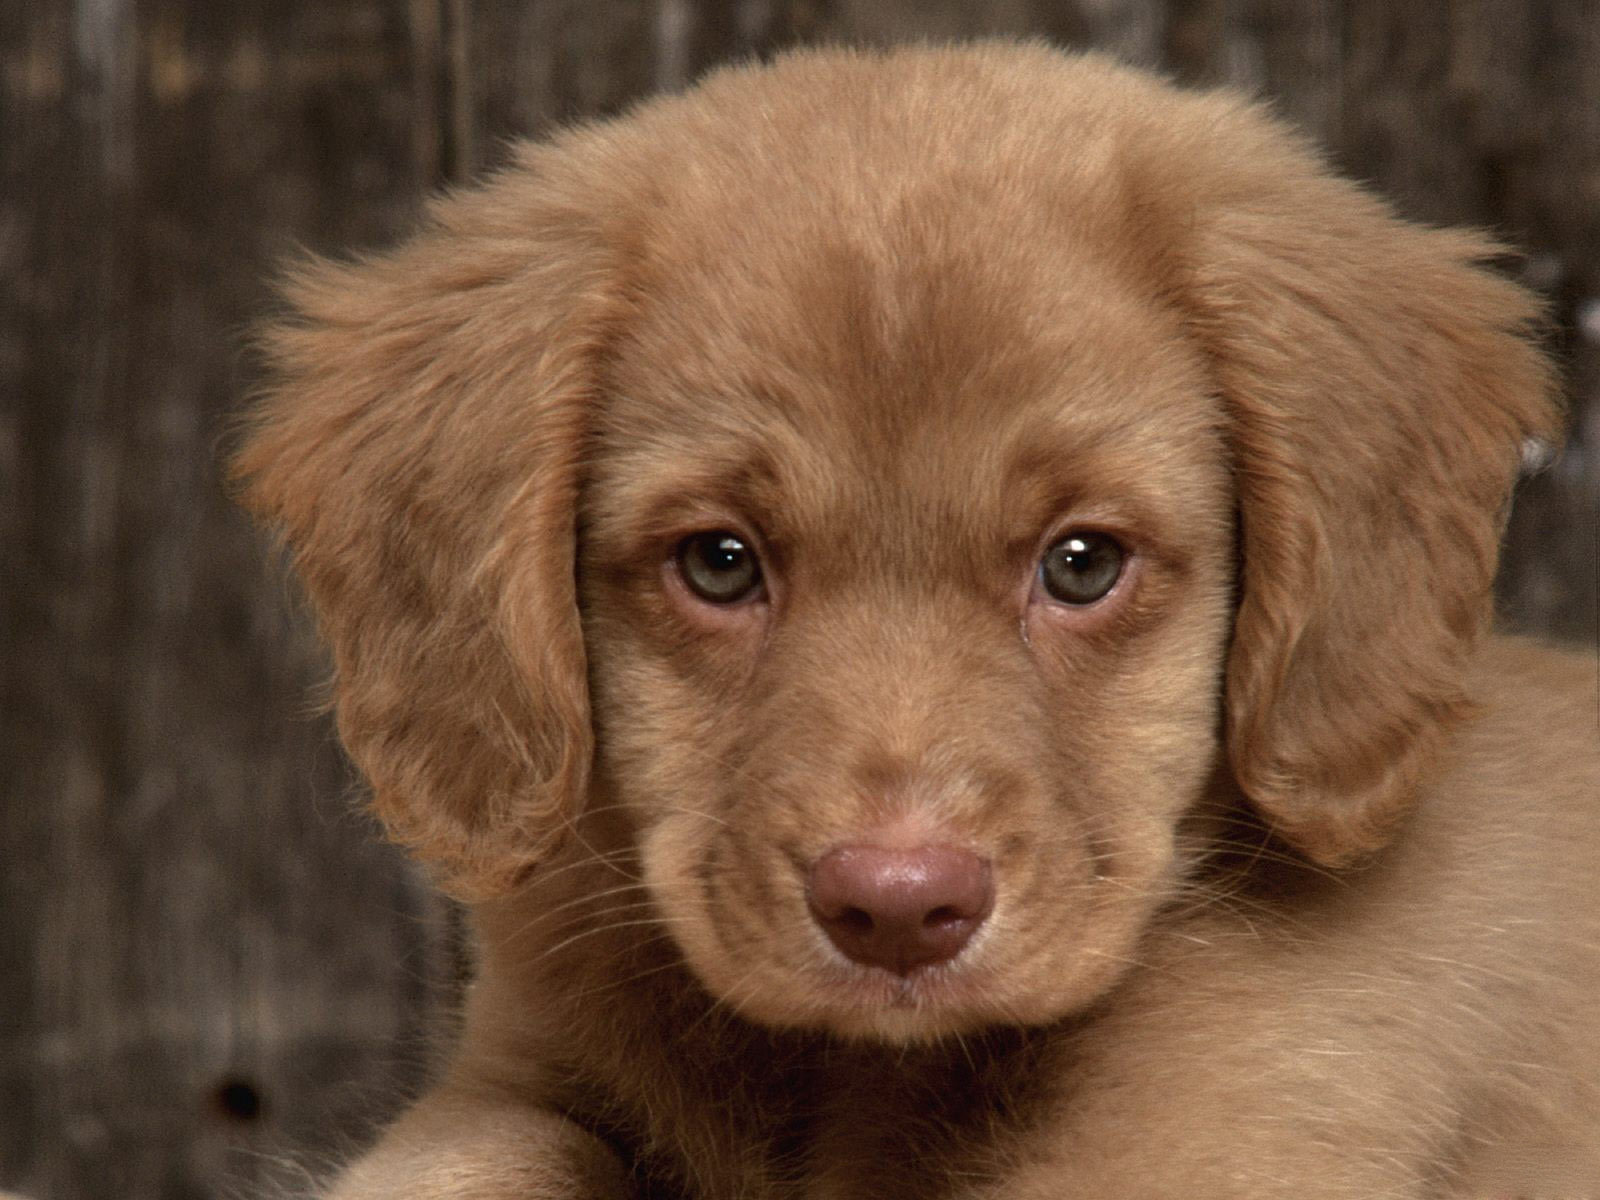 Sad-Puppy-puppies-9726248-1600-1200